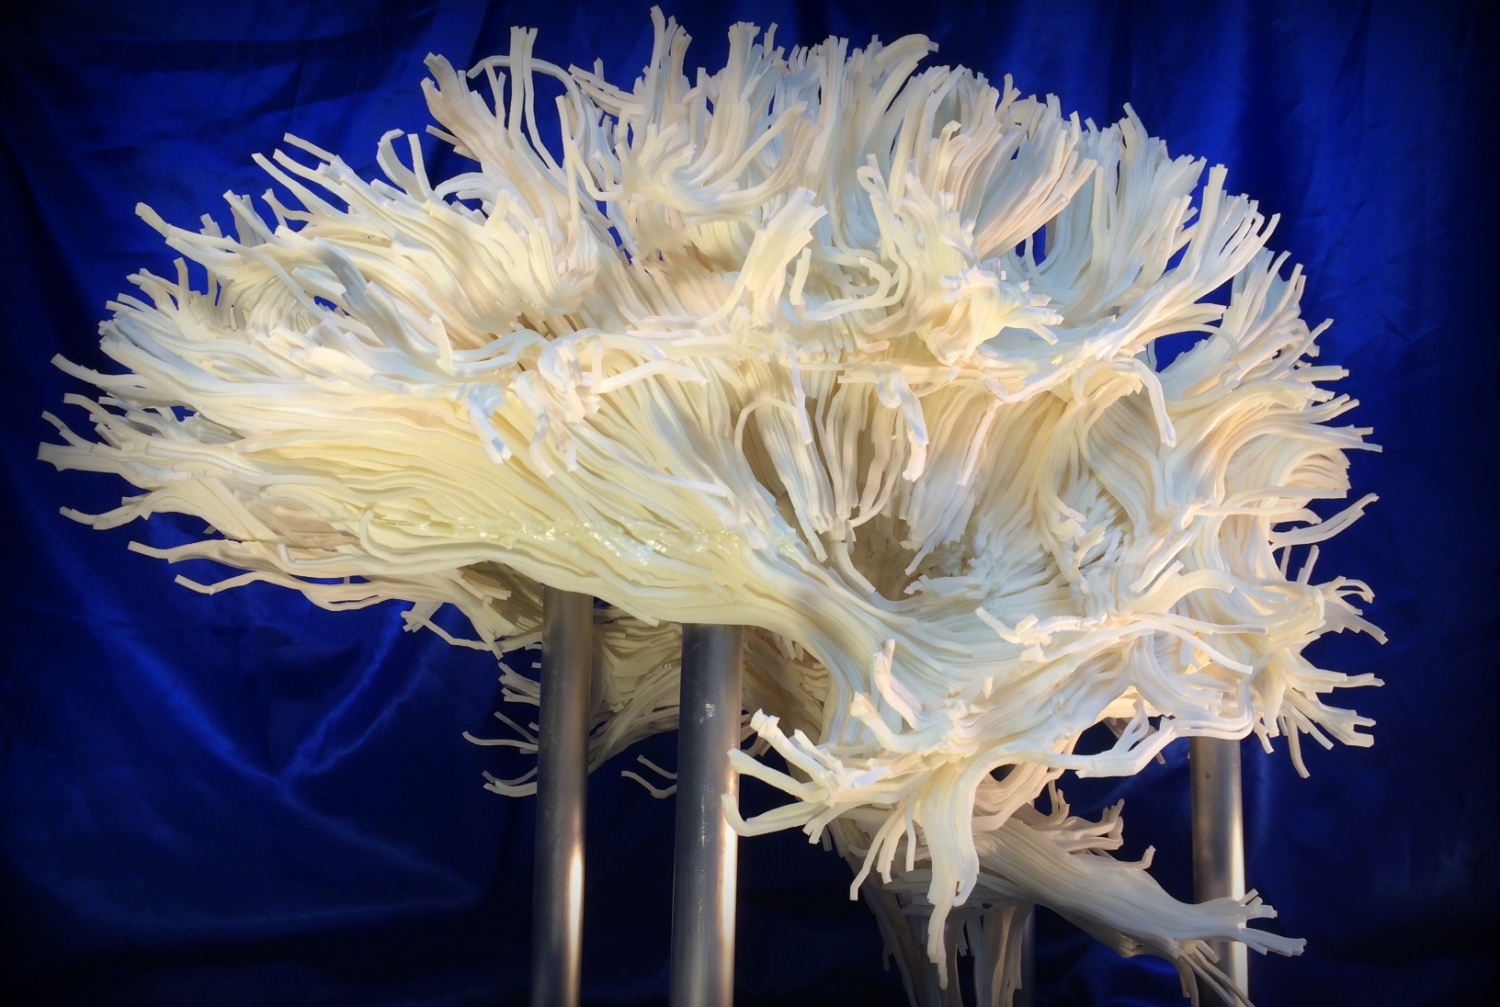 3D brain image, the Franklin Institute